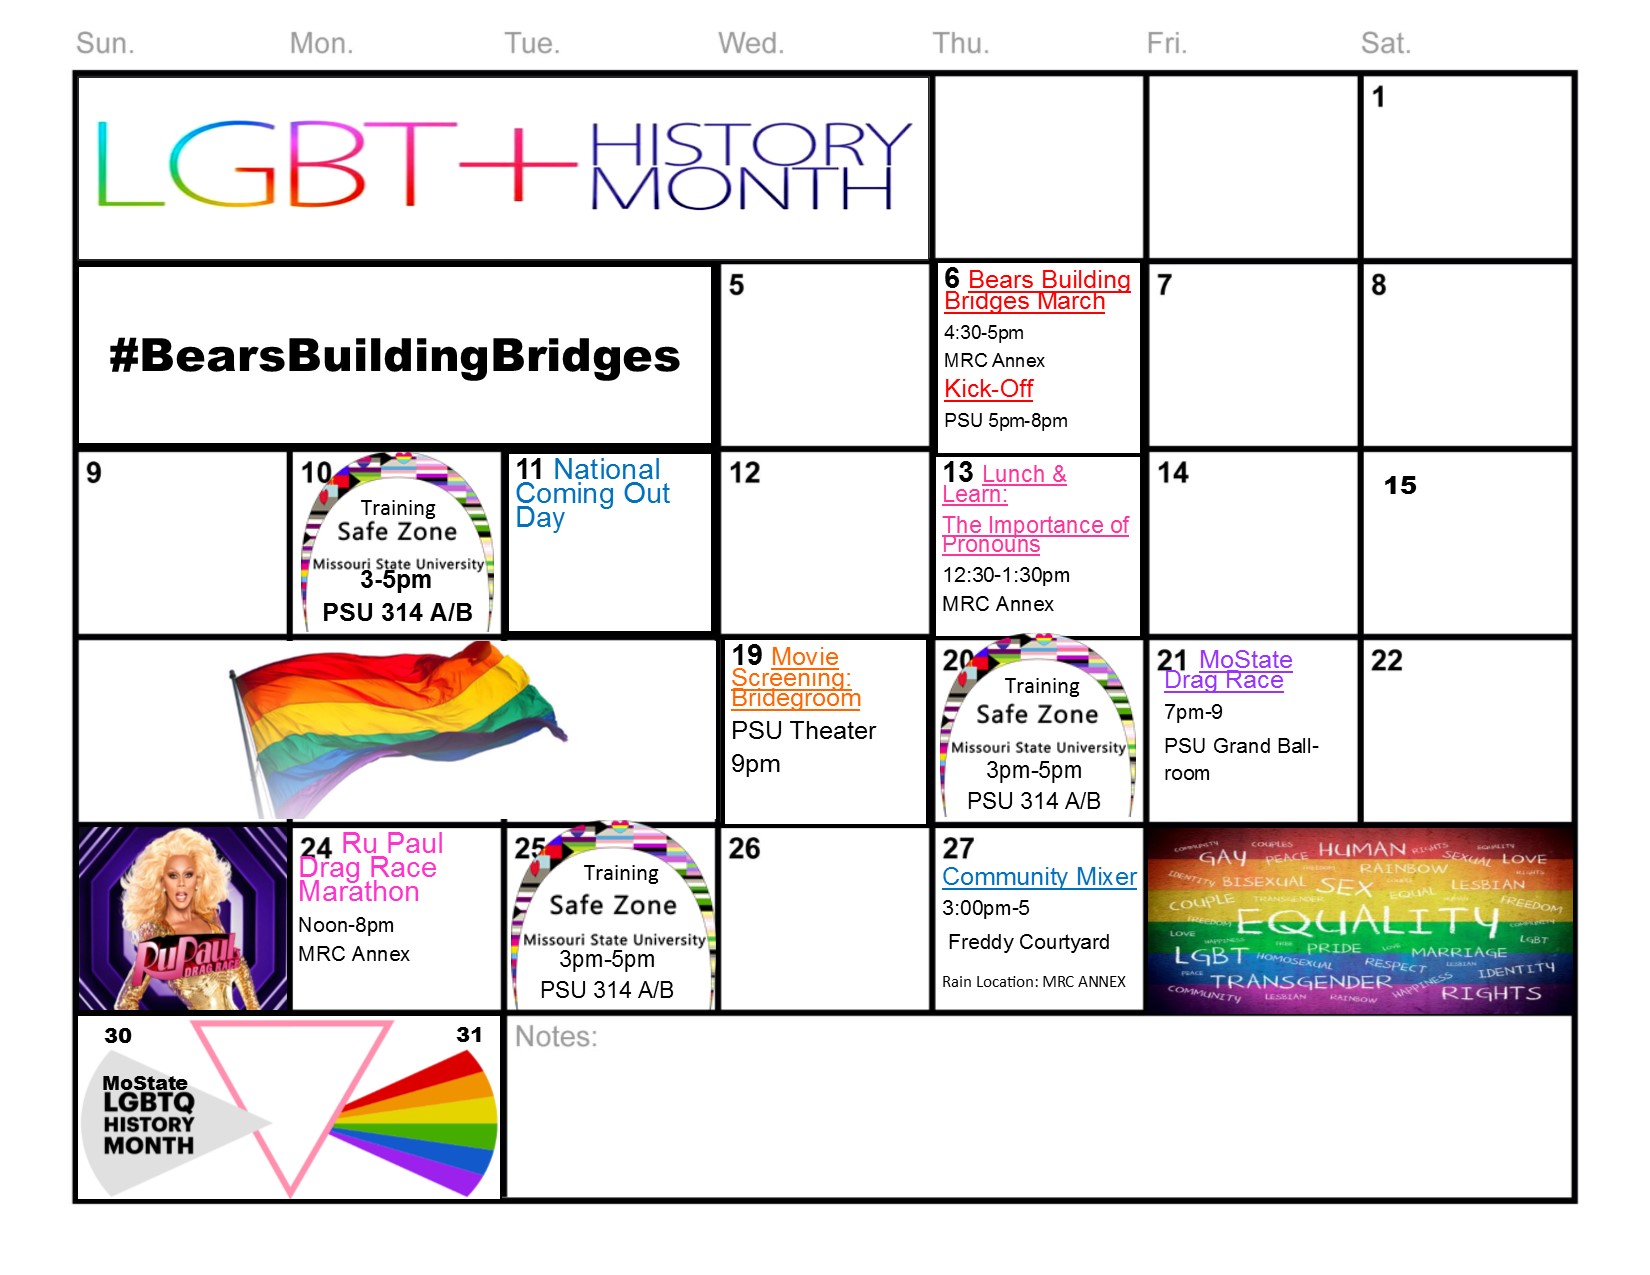 LGBTQ+ Pride Month 2016